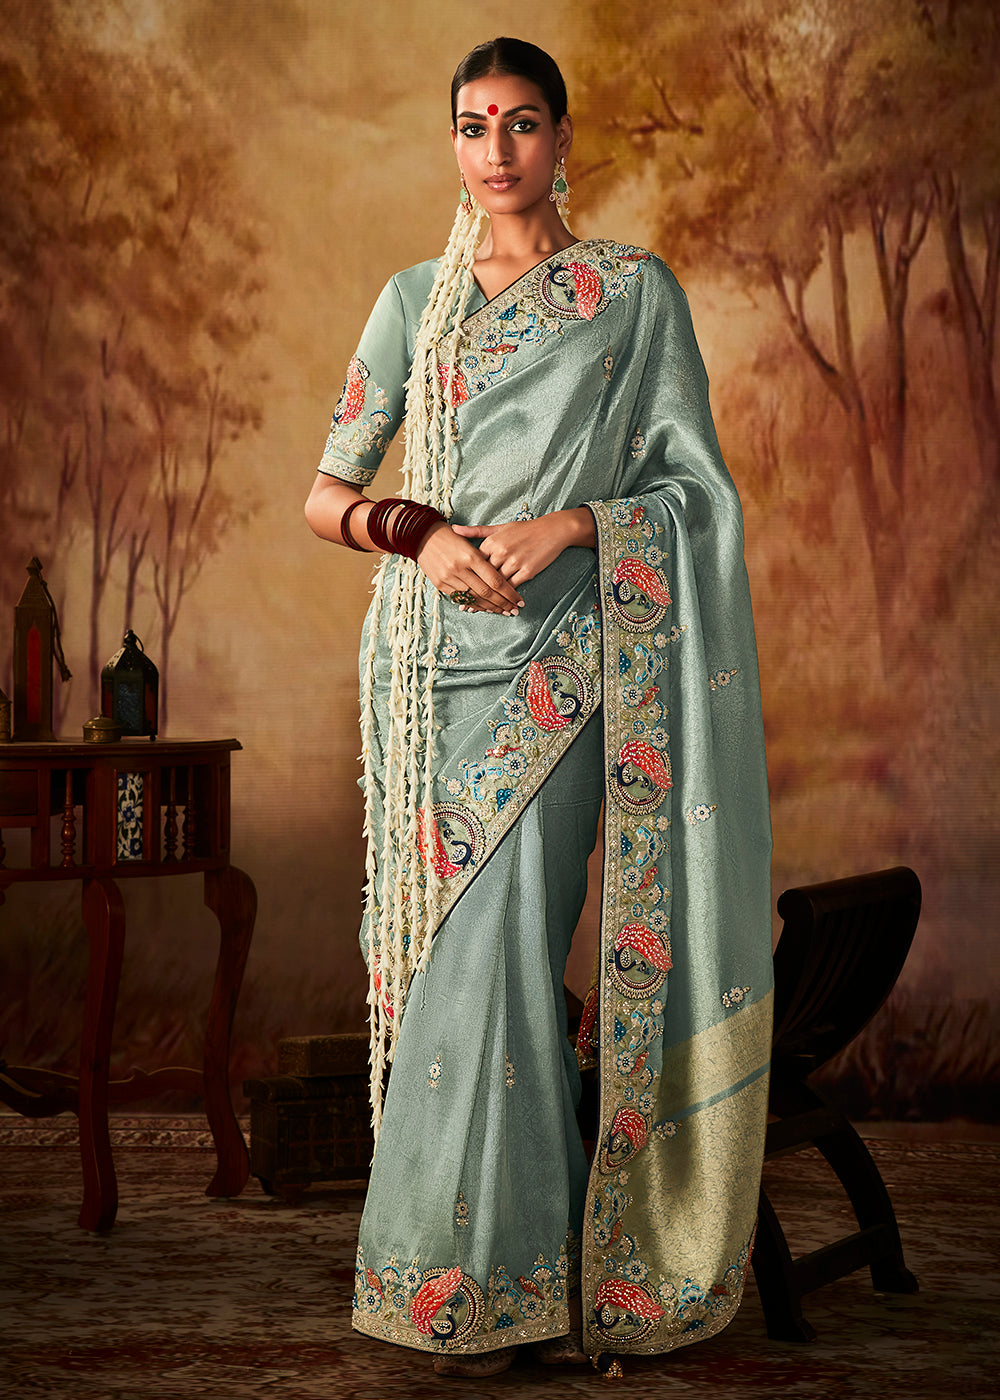 Buy Now Cadet Blue Wedding Wear Embroidered Kanjivaram Silk Saree Online in USA, UK, Canada & Worldwide at Empress Clothing. 